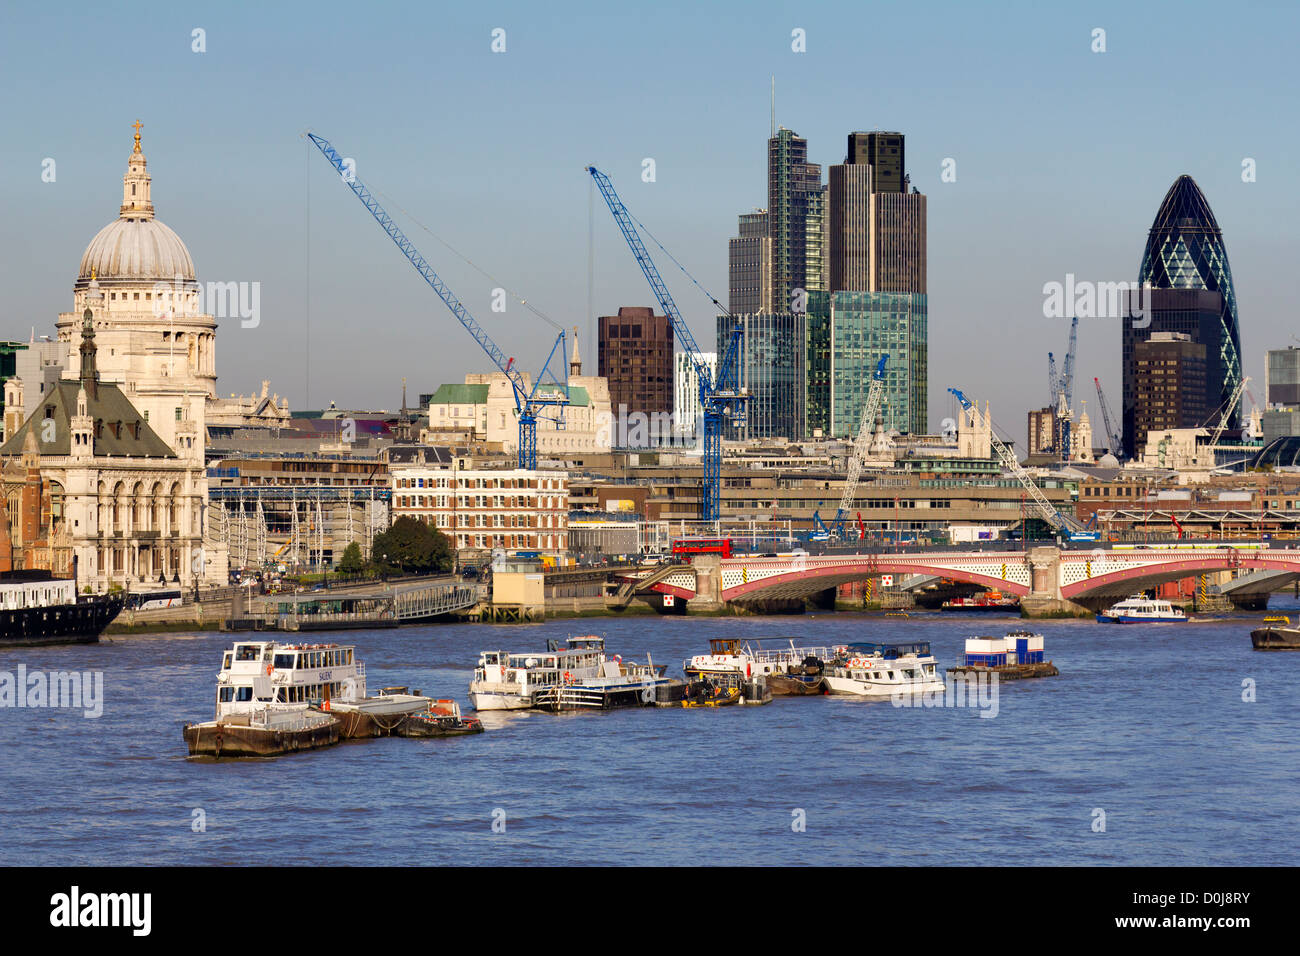 Iconic London skyline viewed from Waterloo Bridge in autumn. Stock Photo